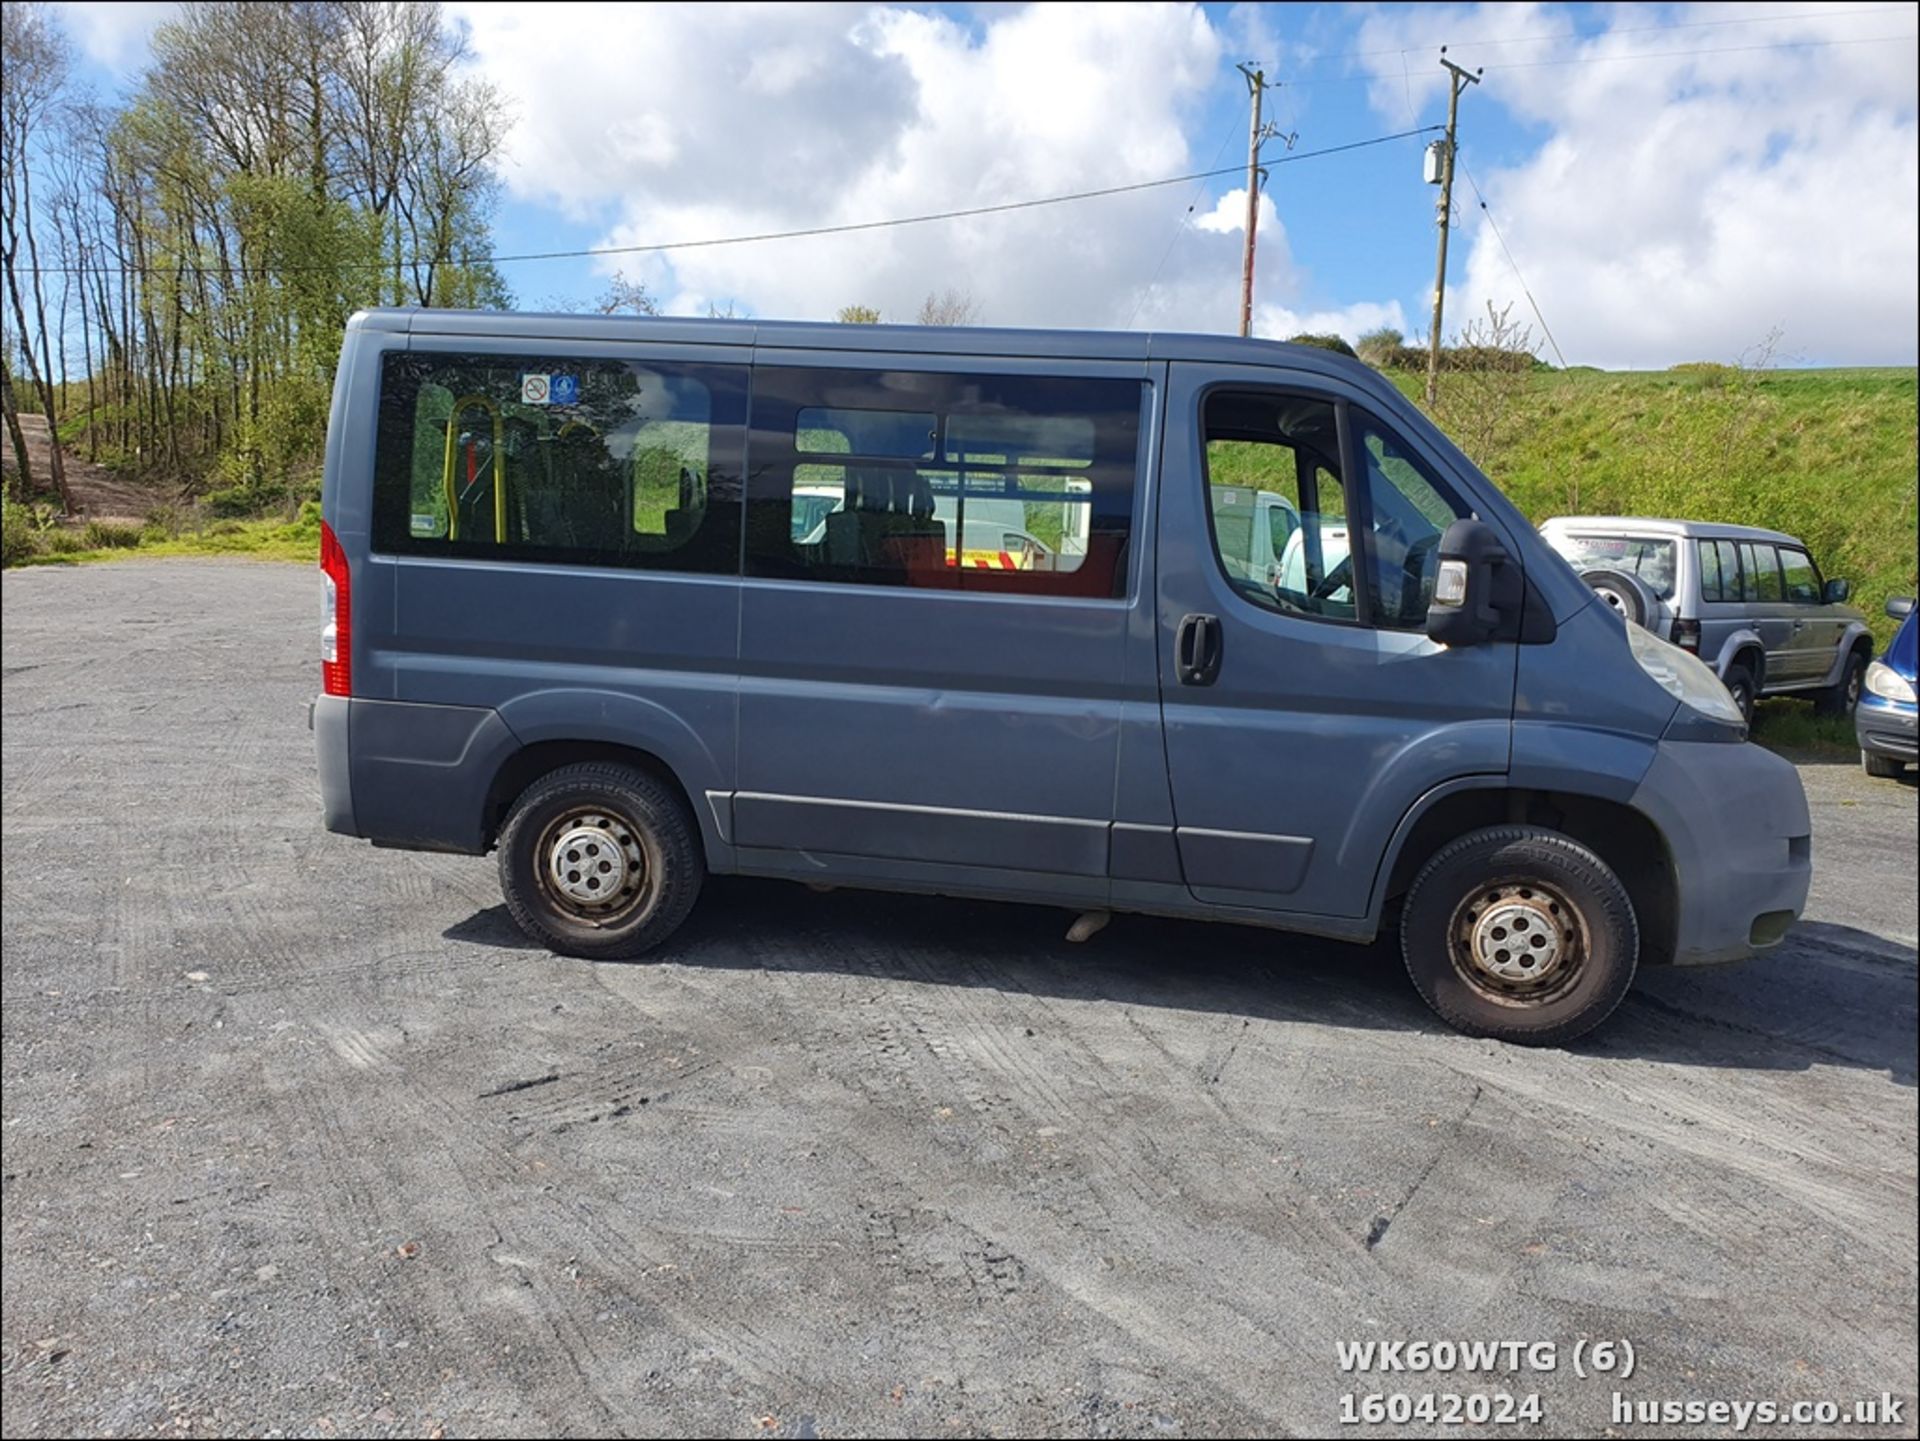 10/60 PEUGEOT BOXER 333 SWB - 2198cc Van (Grey, 47k) - Image 7 of 57